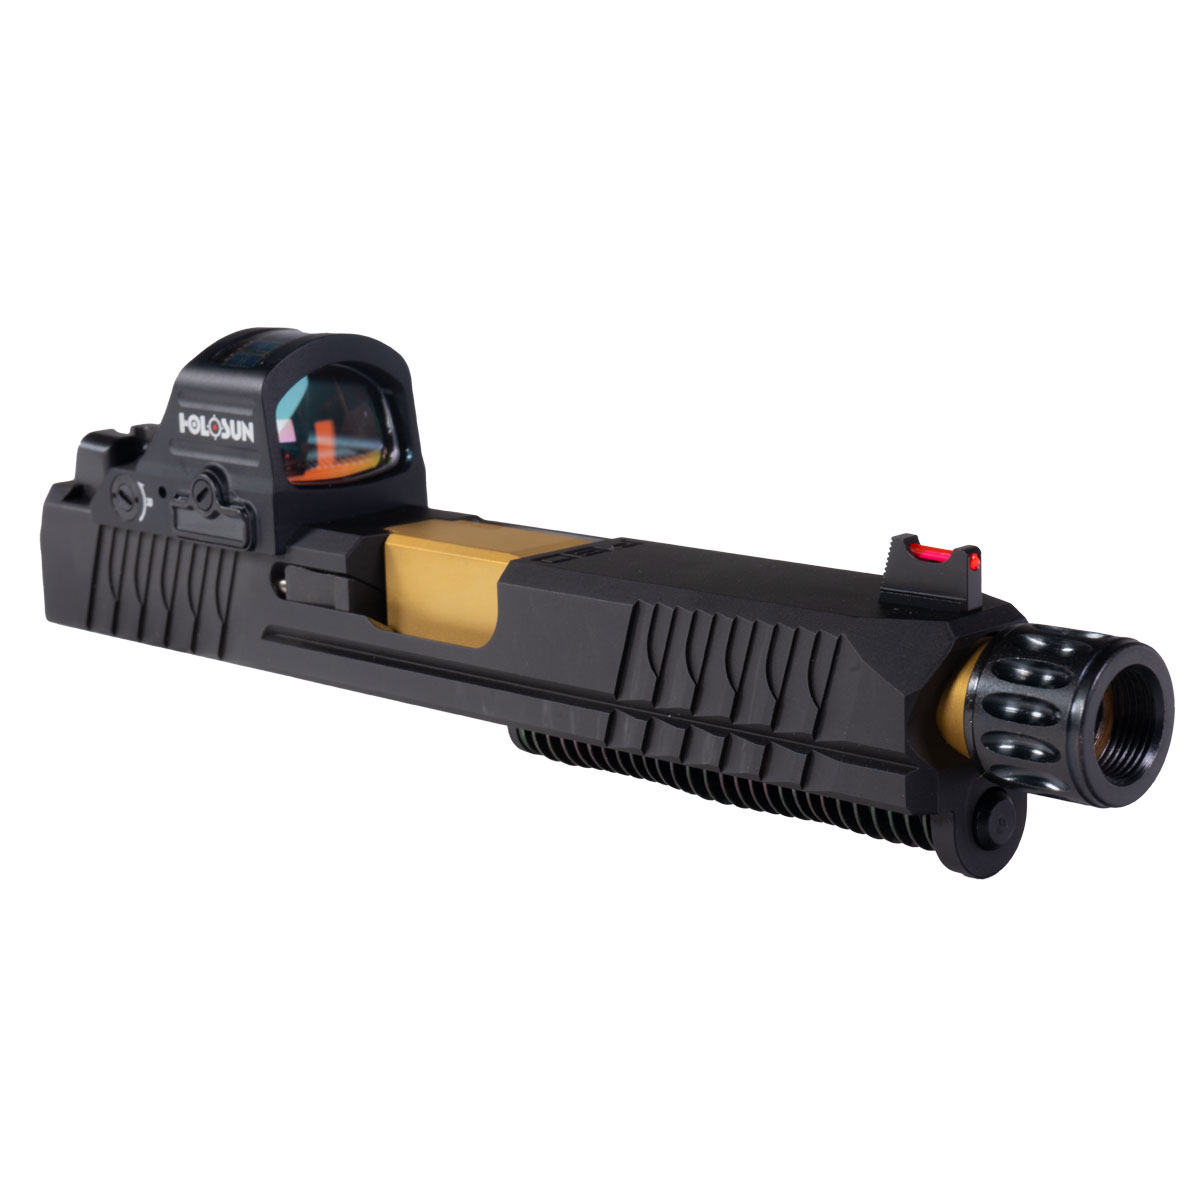 DDS 'Fiat Lux w/ HS507C-X2 Red Dot' 9mm Complete Slide Kit - Glock 19 Gen 1-3 Compatible